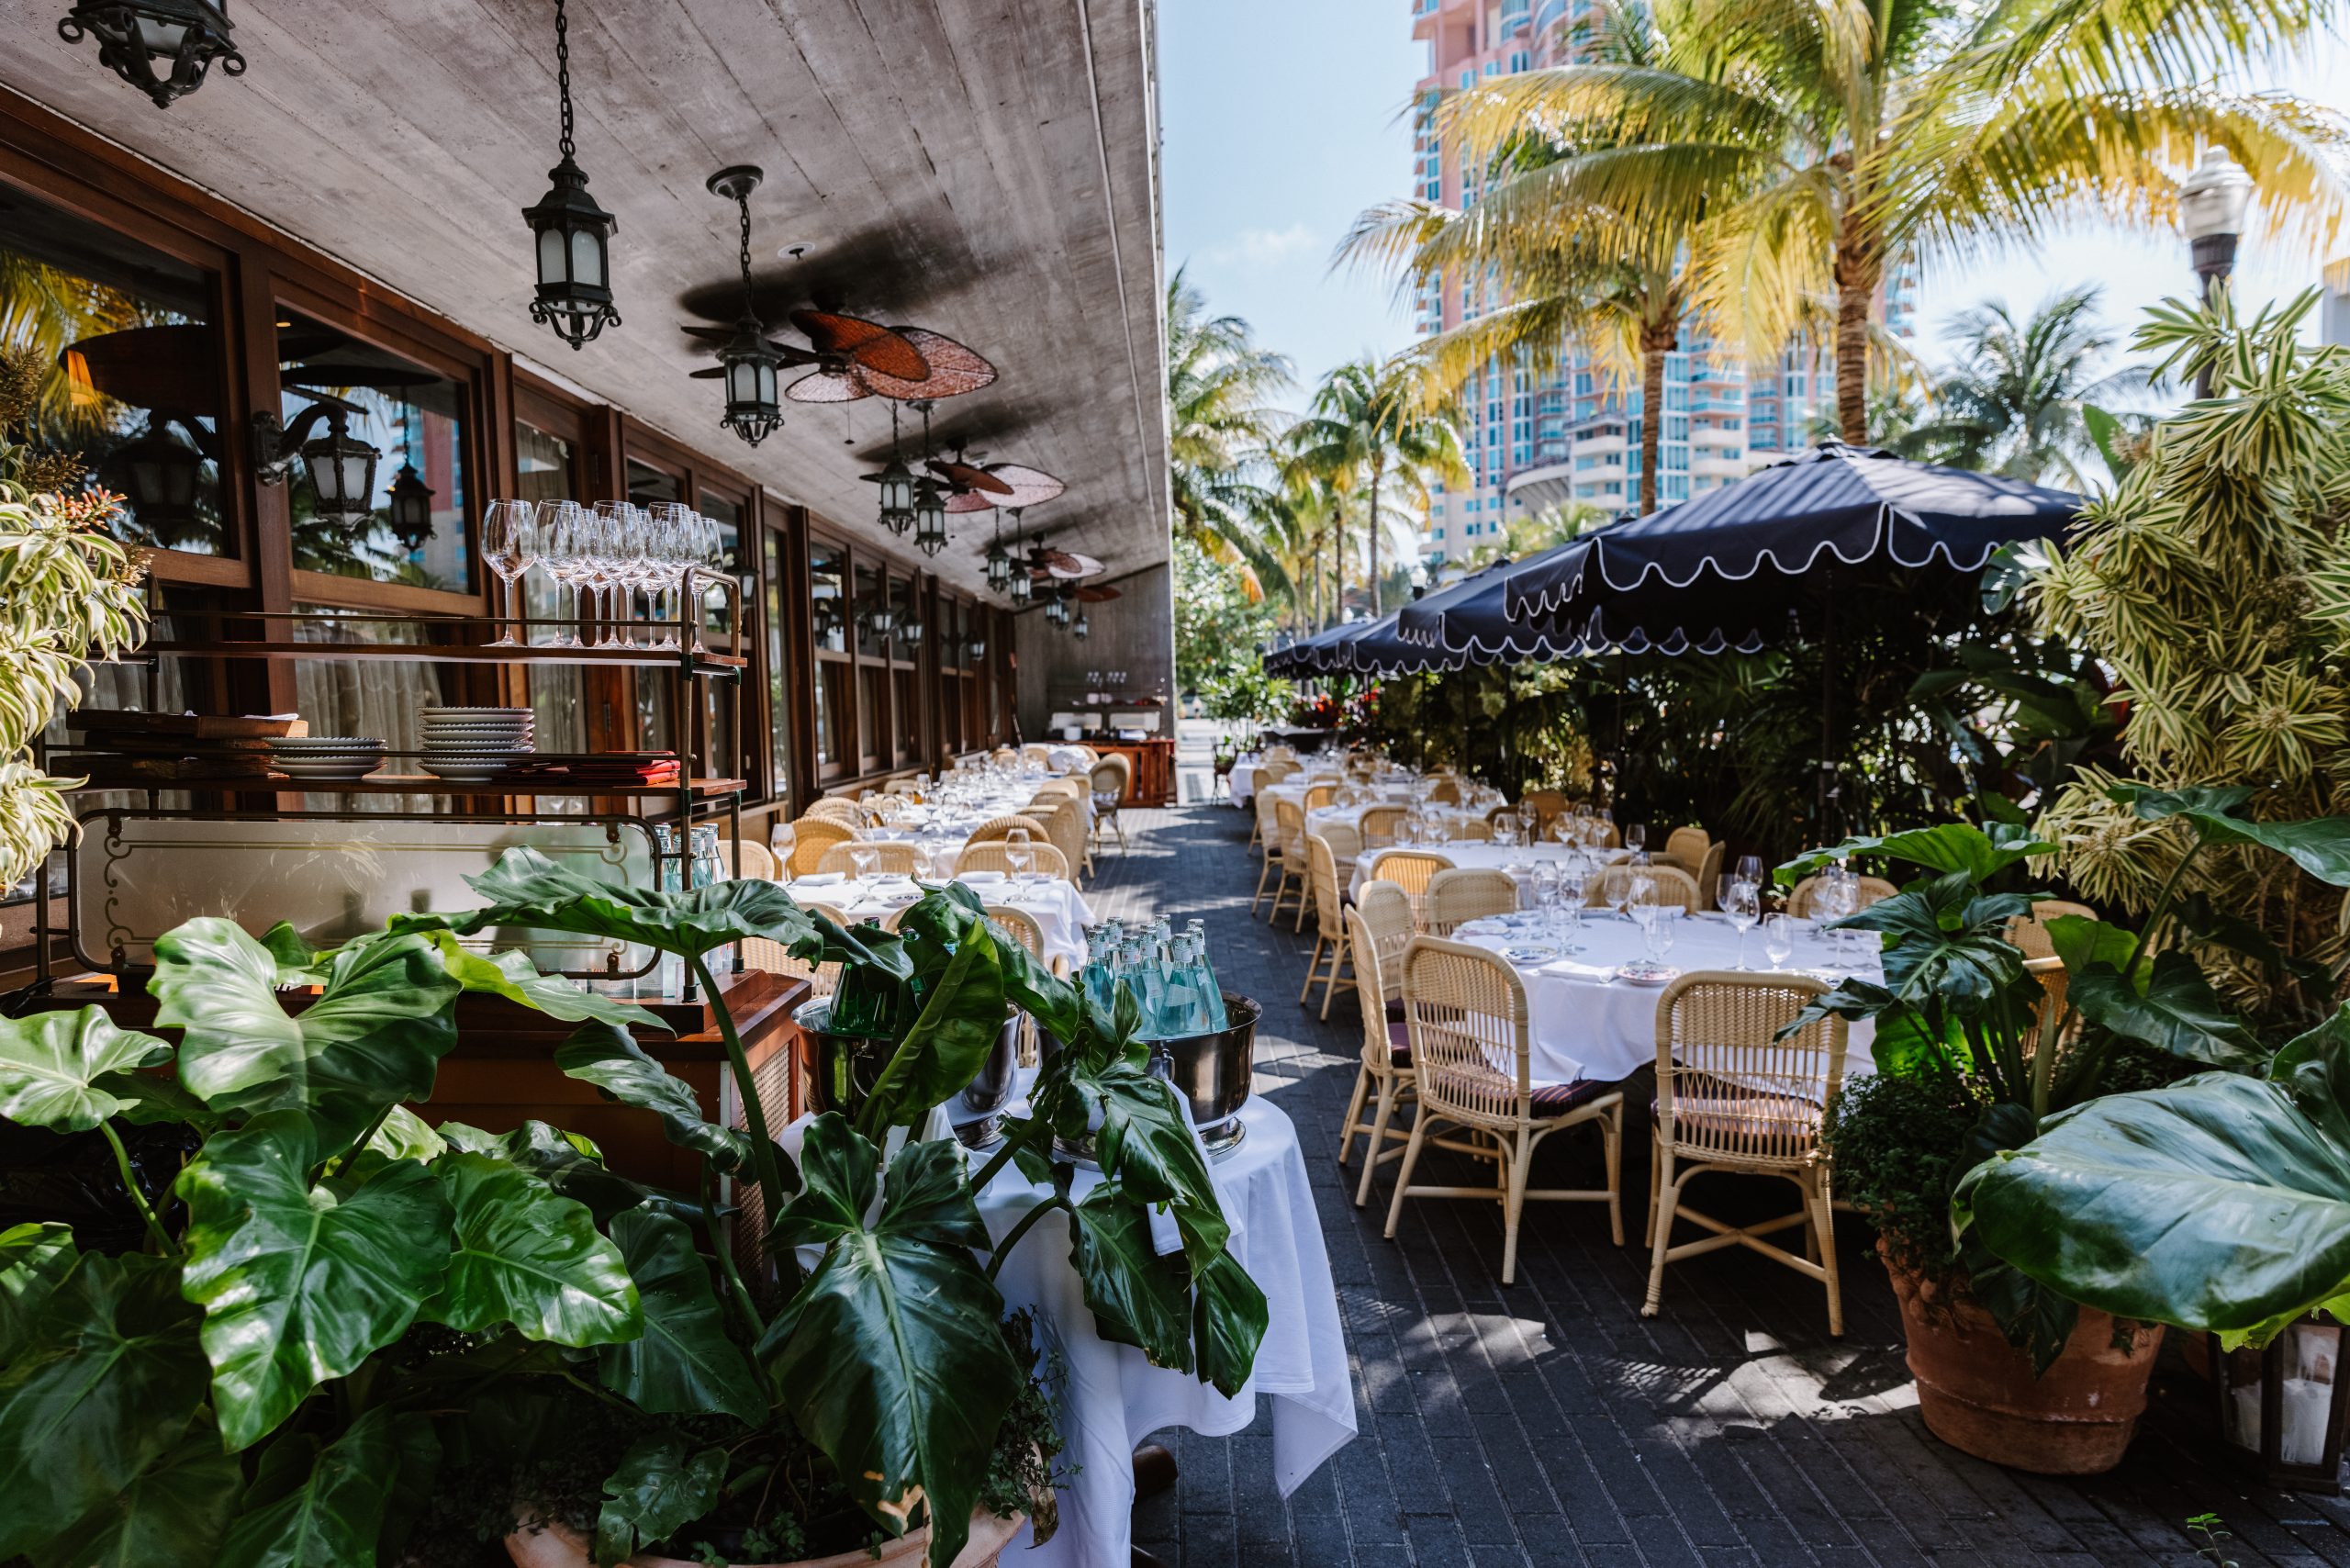 MichelinStarred Italian Restaurant Carbone Opens in South Beach